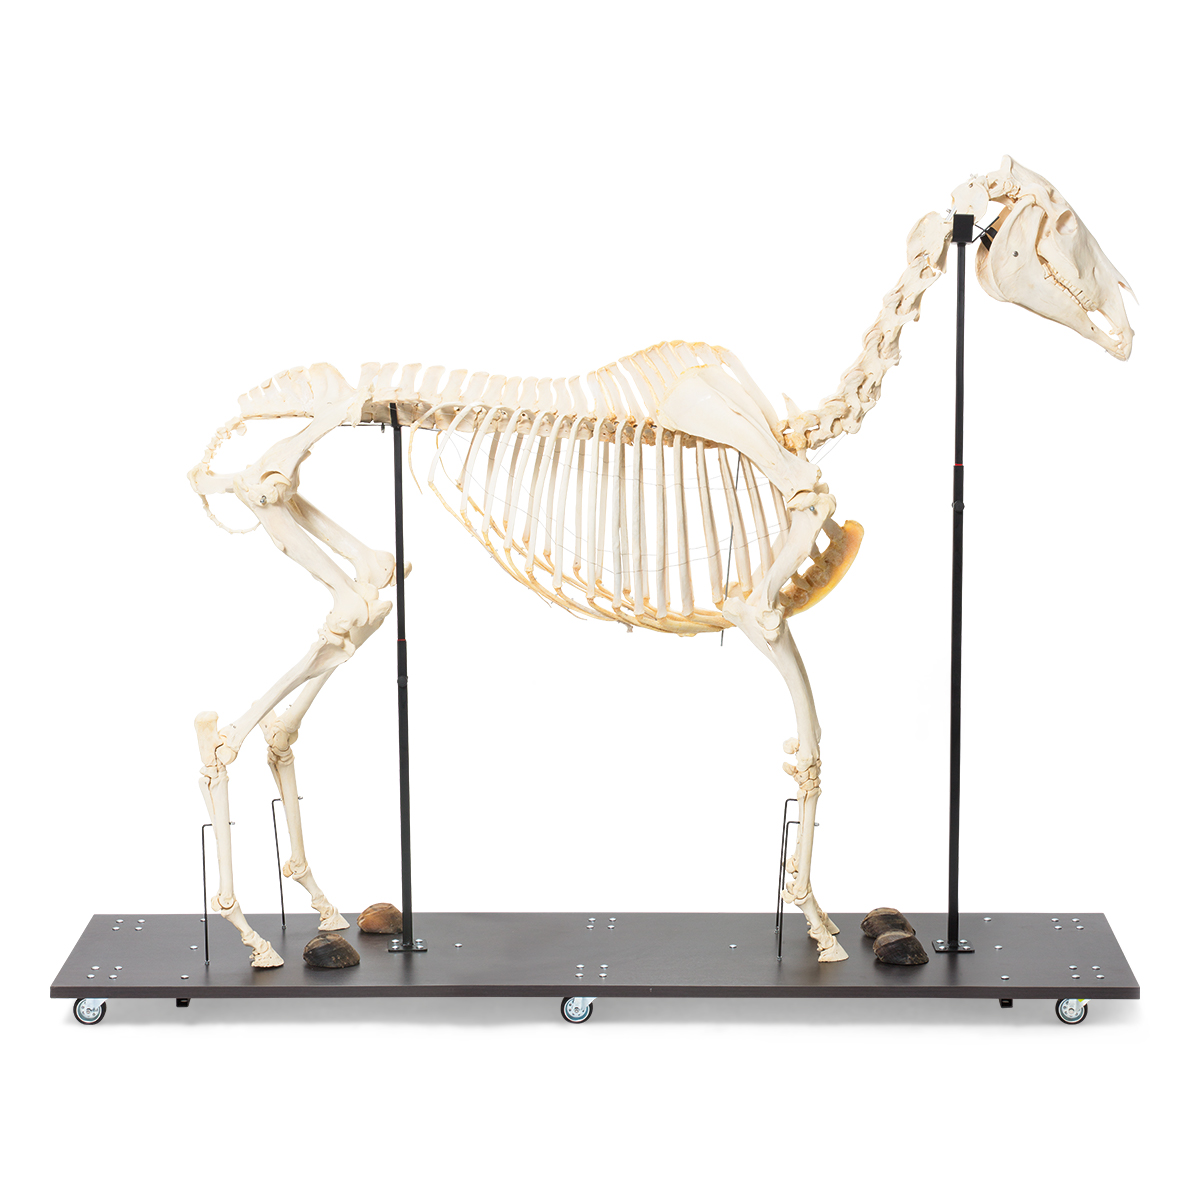 Pferdeskelett (Equus ferus caballus), männlich, Präparat, Bestellnummer 1021003, T300141m, 3B Scientific